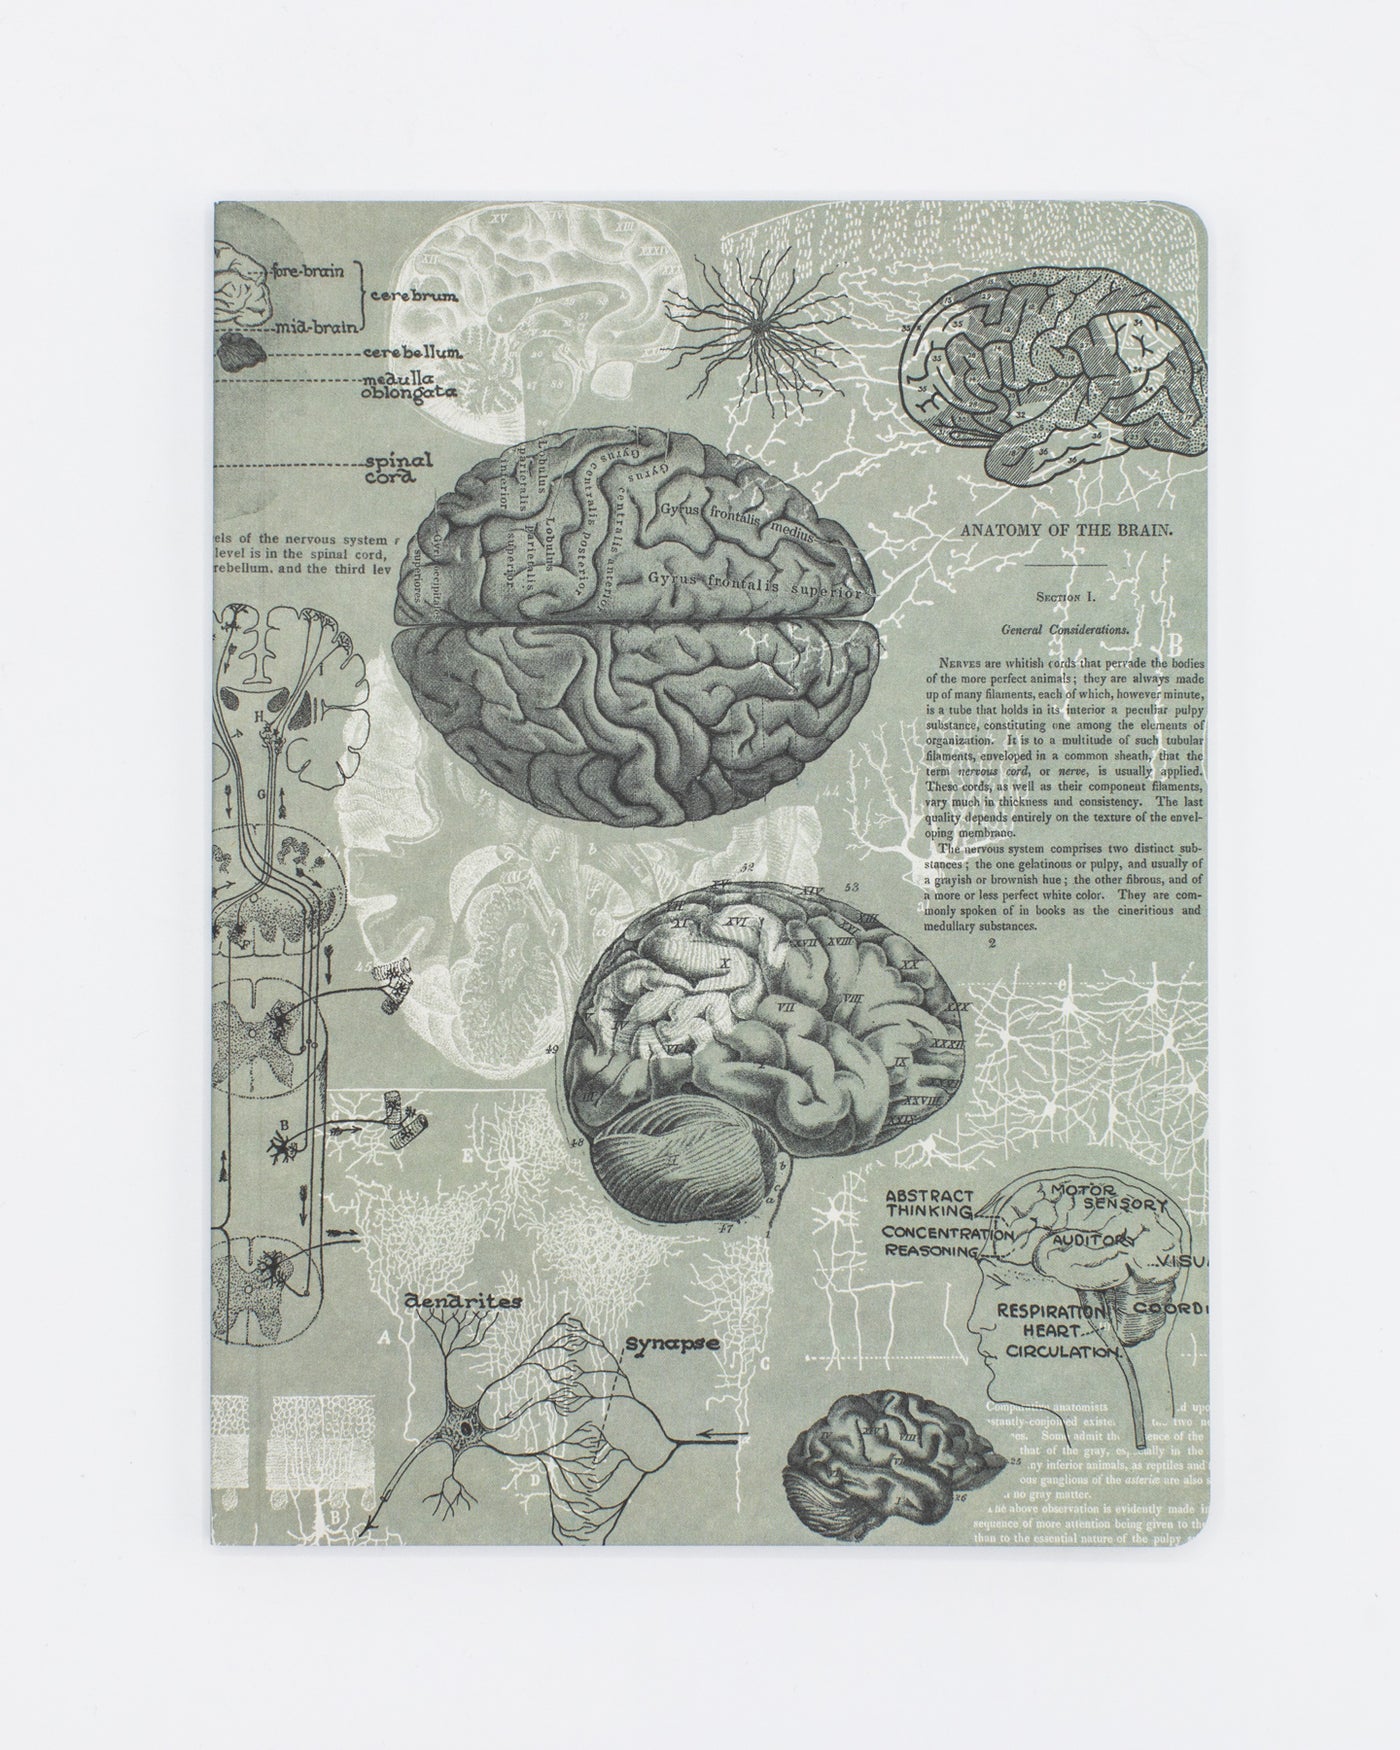 Brain Notebook